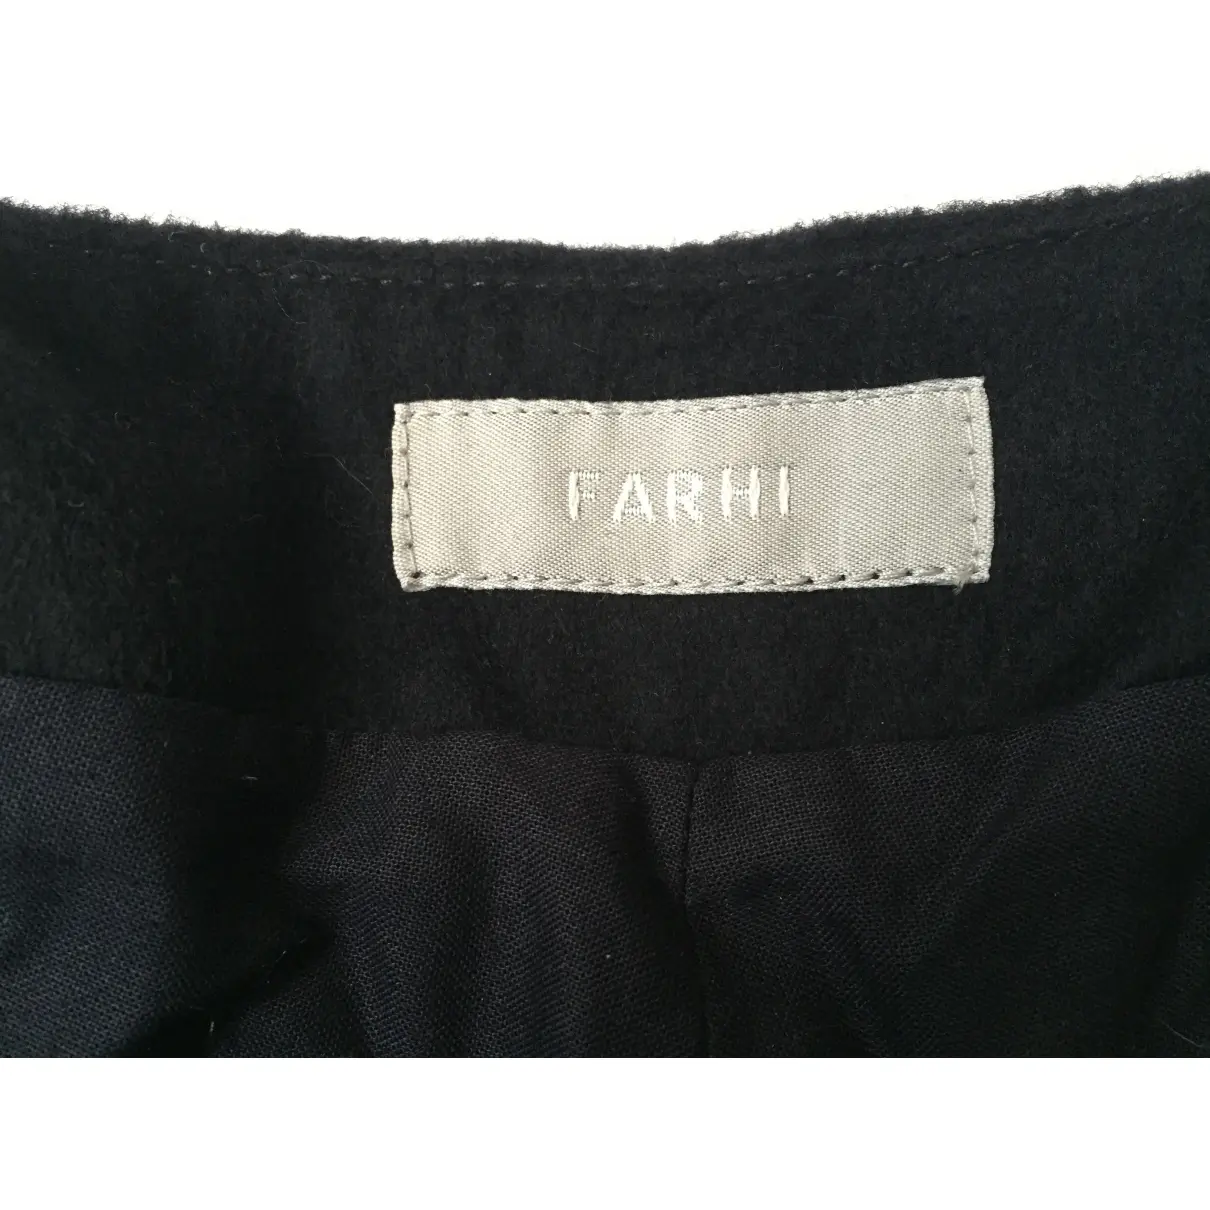 Buy Farhi by Nicole Farhi Wool large pants online